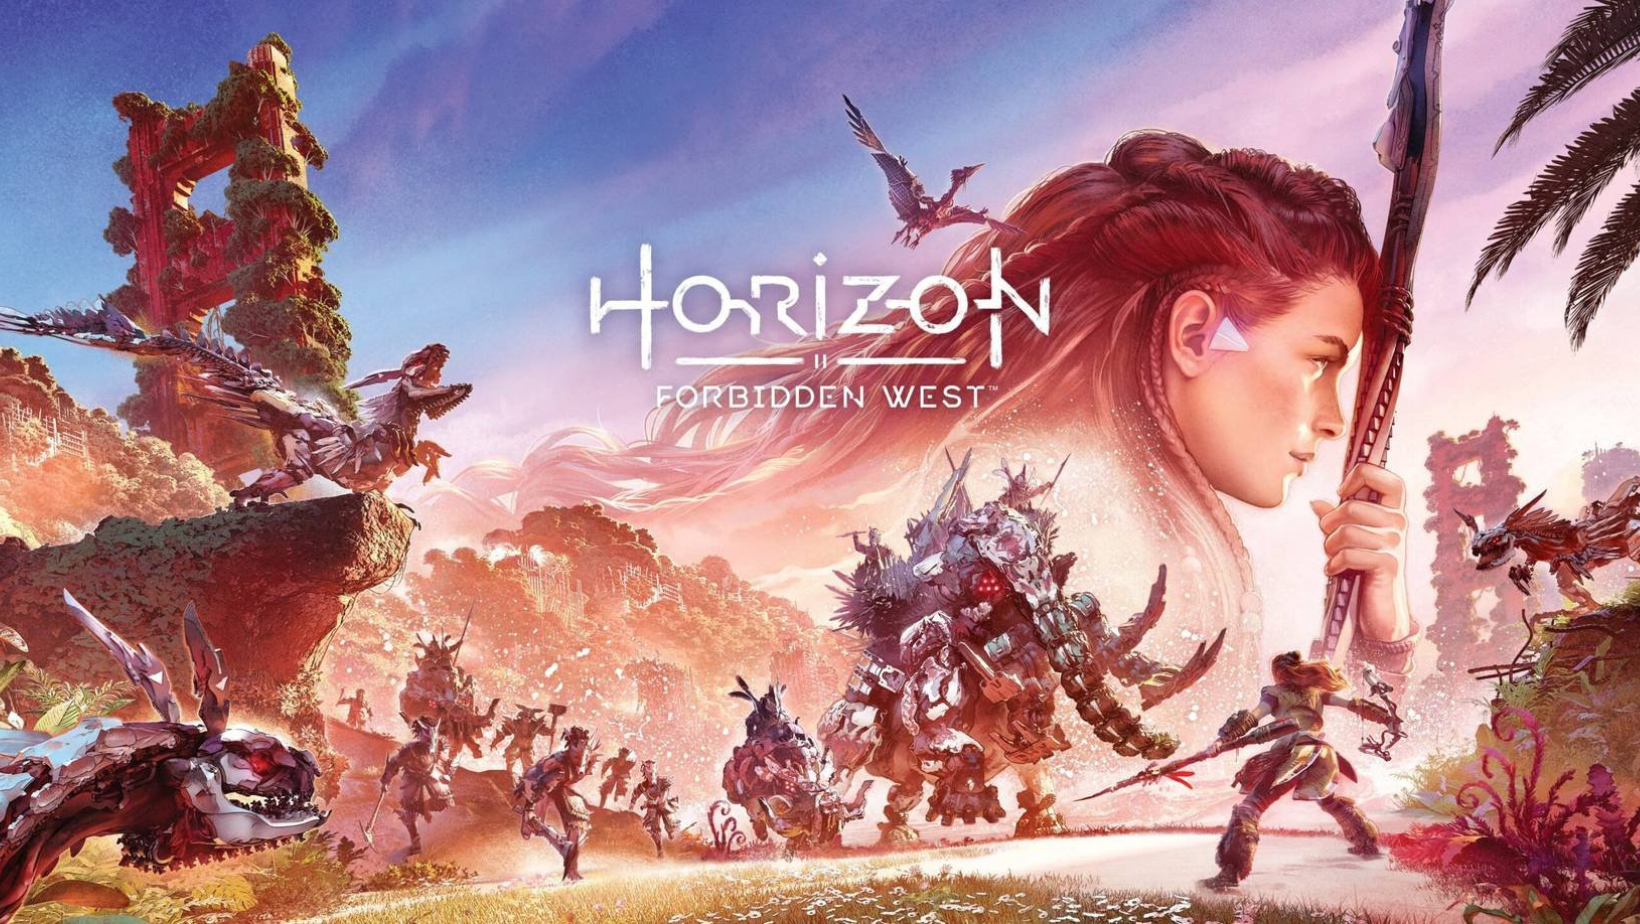 Horizon Forbidden West DLC confirms Aloy is gay